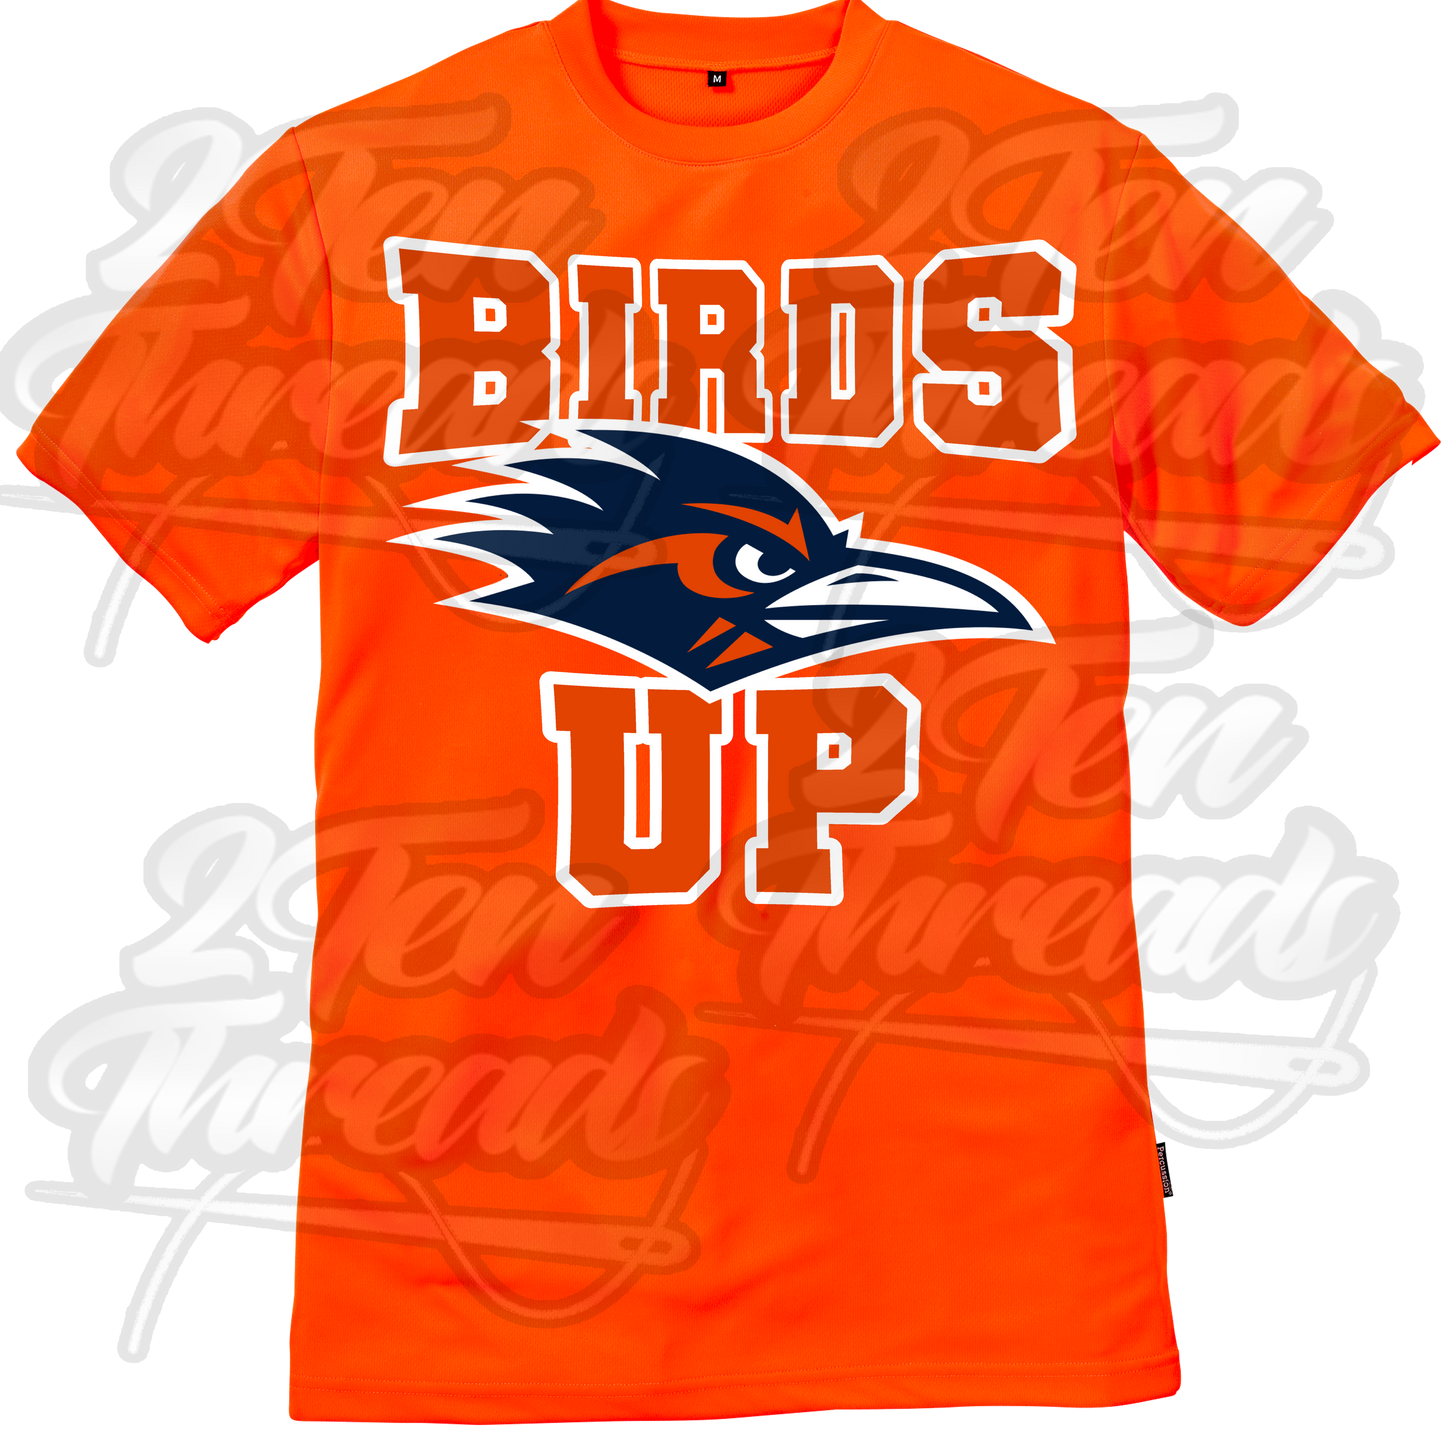 UTSA Birds UP Meep Logo